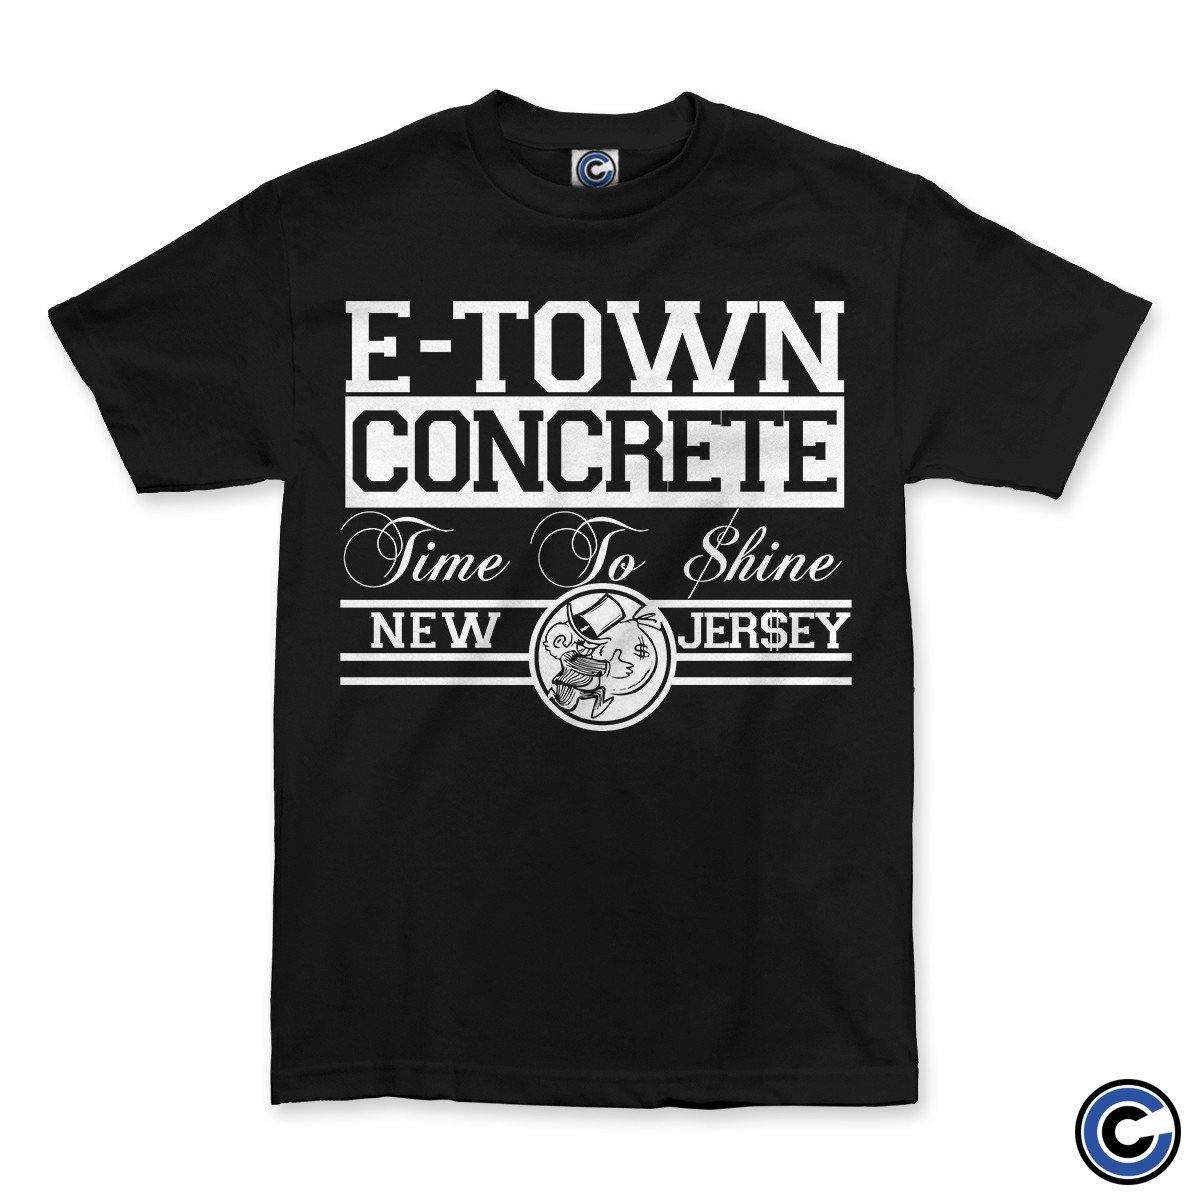 E. Town Concrete 